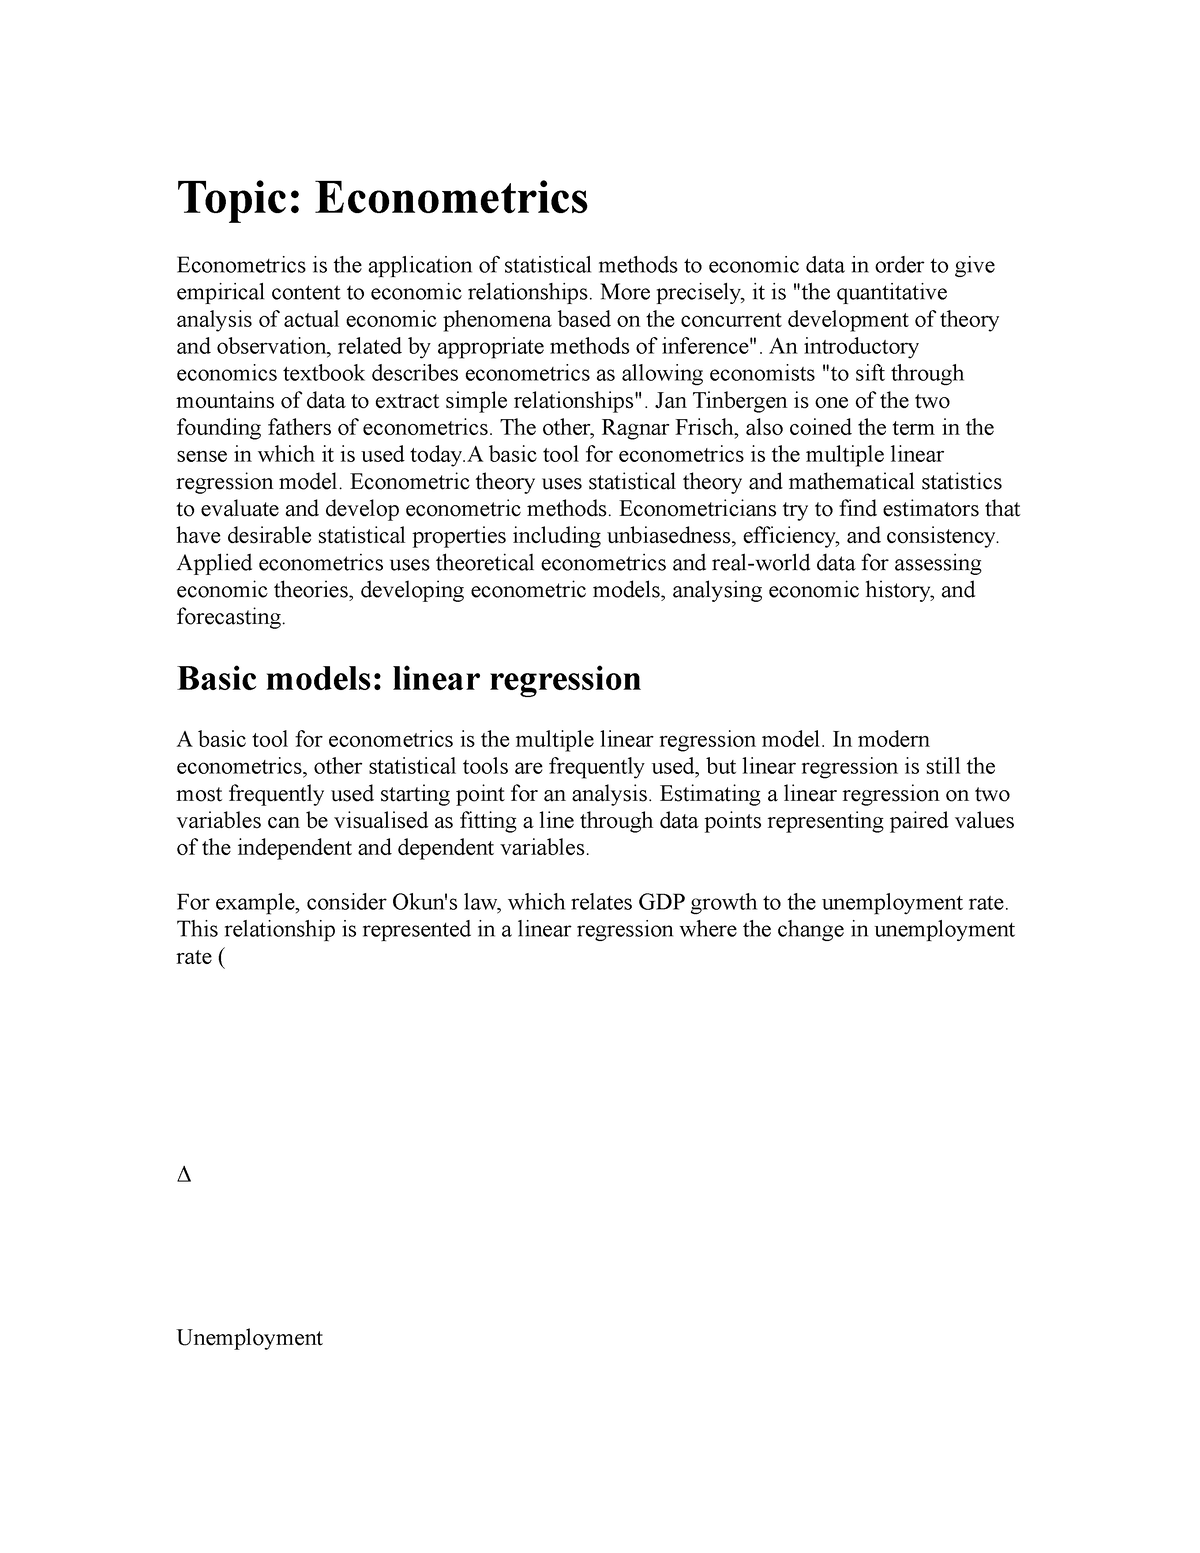 econometrics essay writer